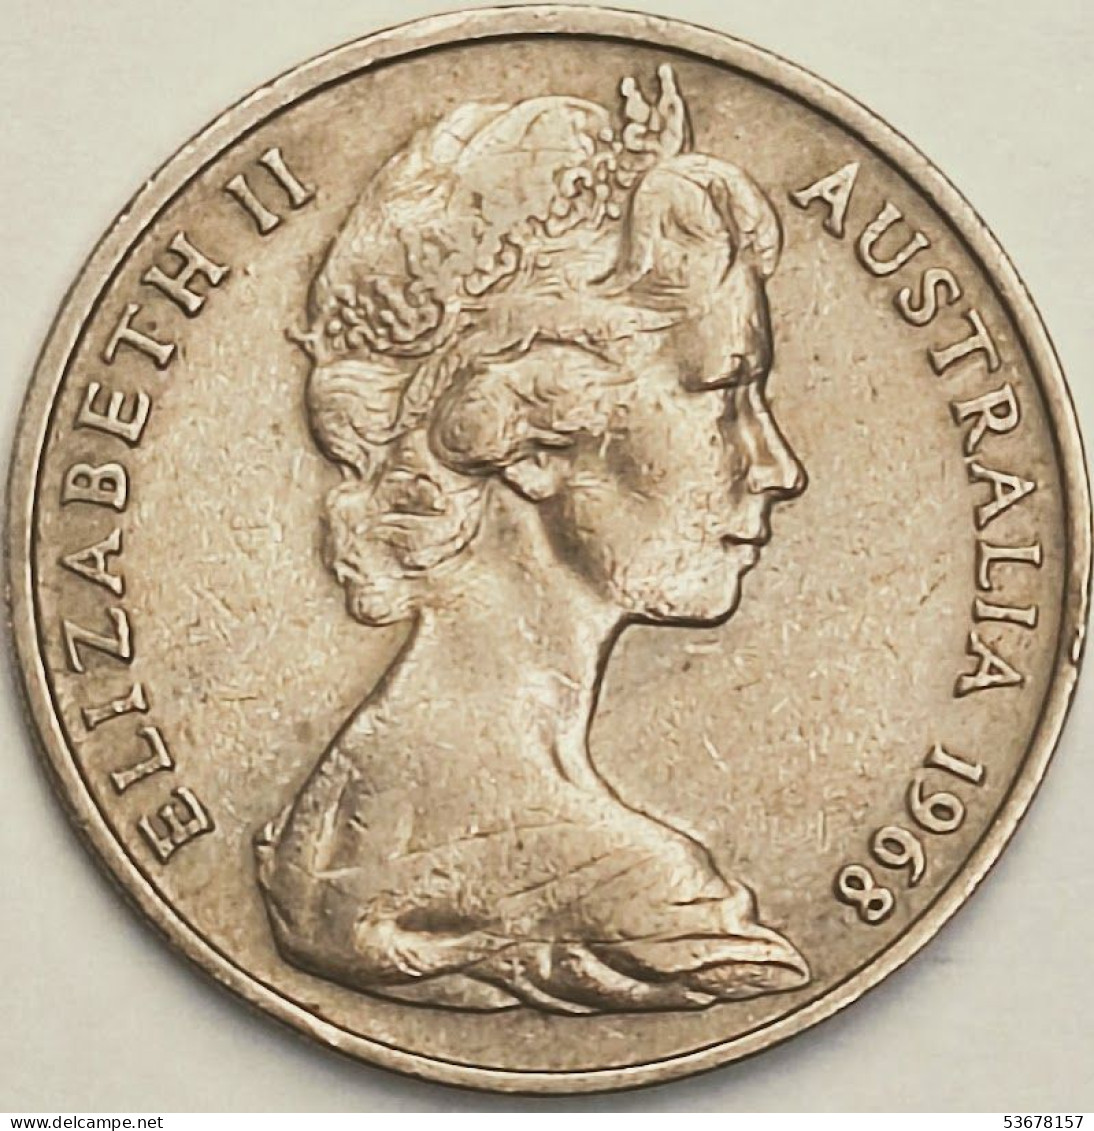 Australia - 20 Cents 1968, KM# 66 (#2812) - 20 Cents